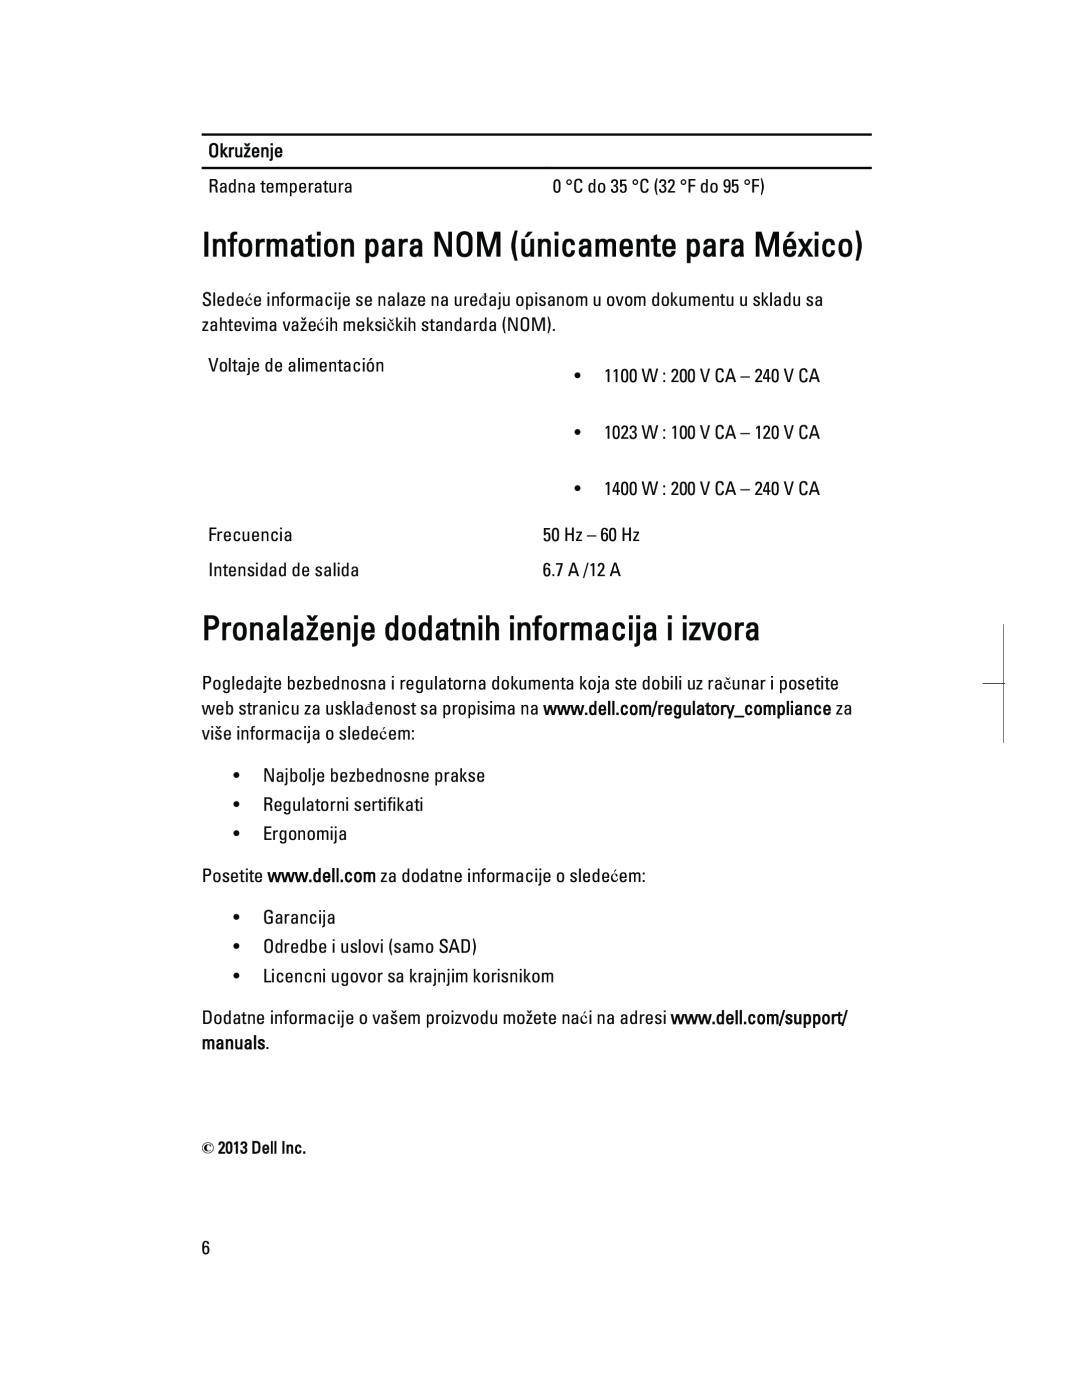 Dell R7610 manual Information para NOM únicamente para México, Pronalaženje dodatnih informacija i izvora, Okruženje 